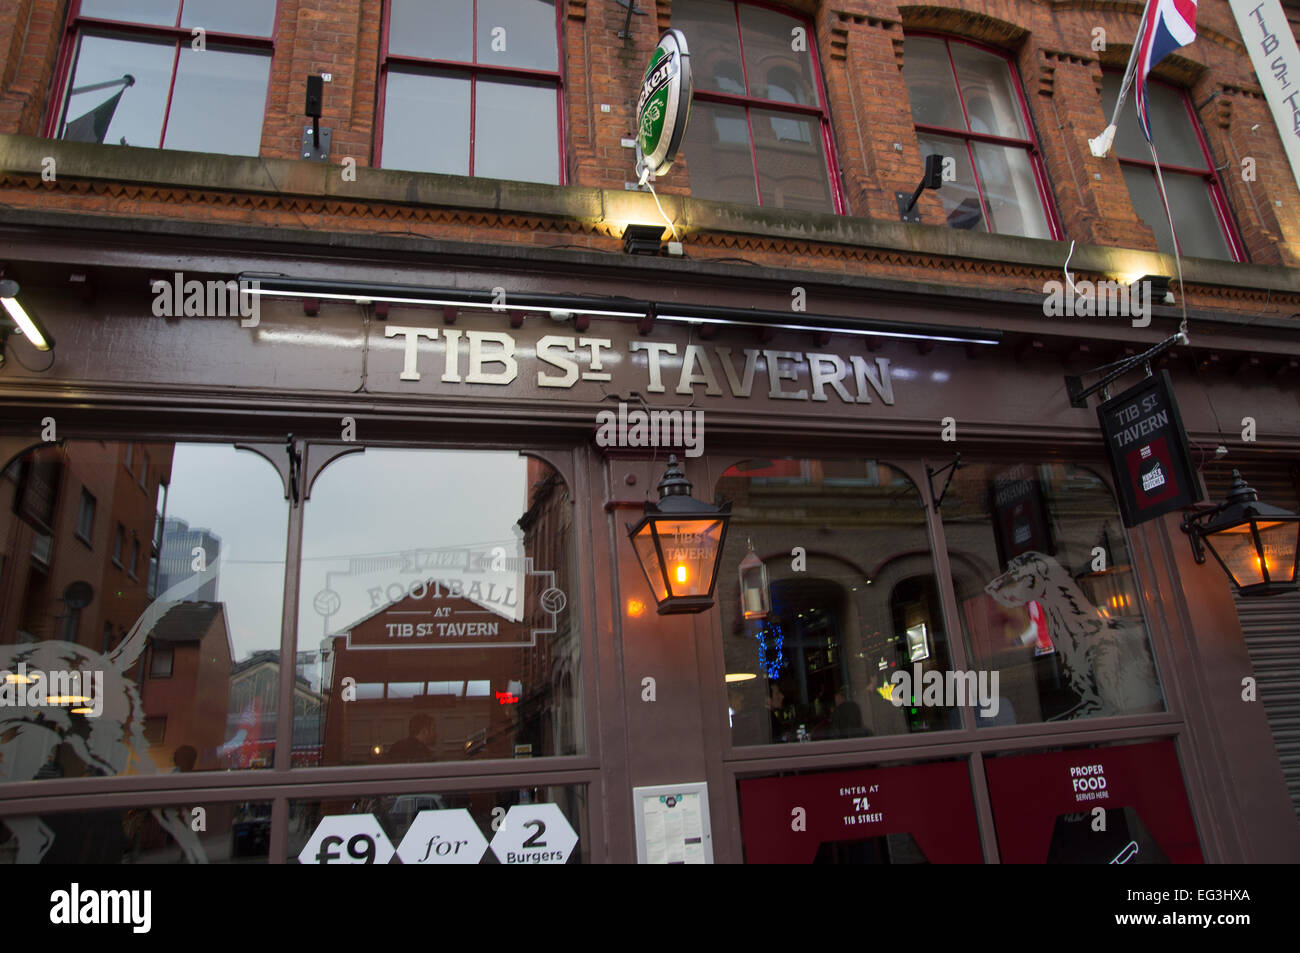 Tib st Tavern, Northern quarter, Manchester Stock Photo